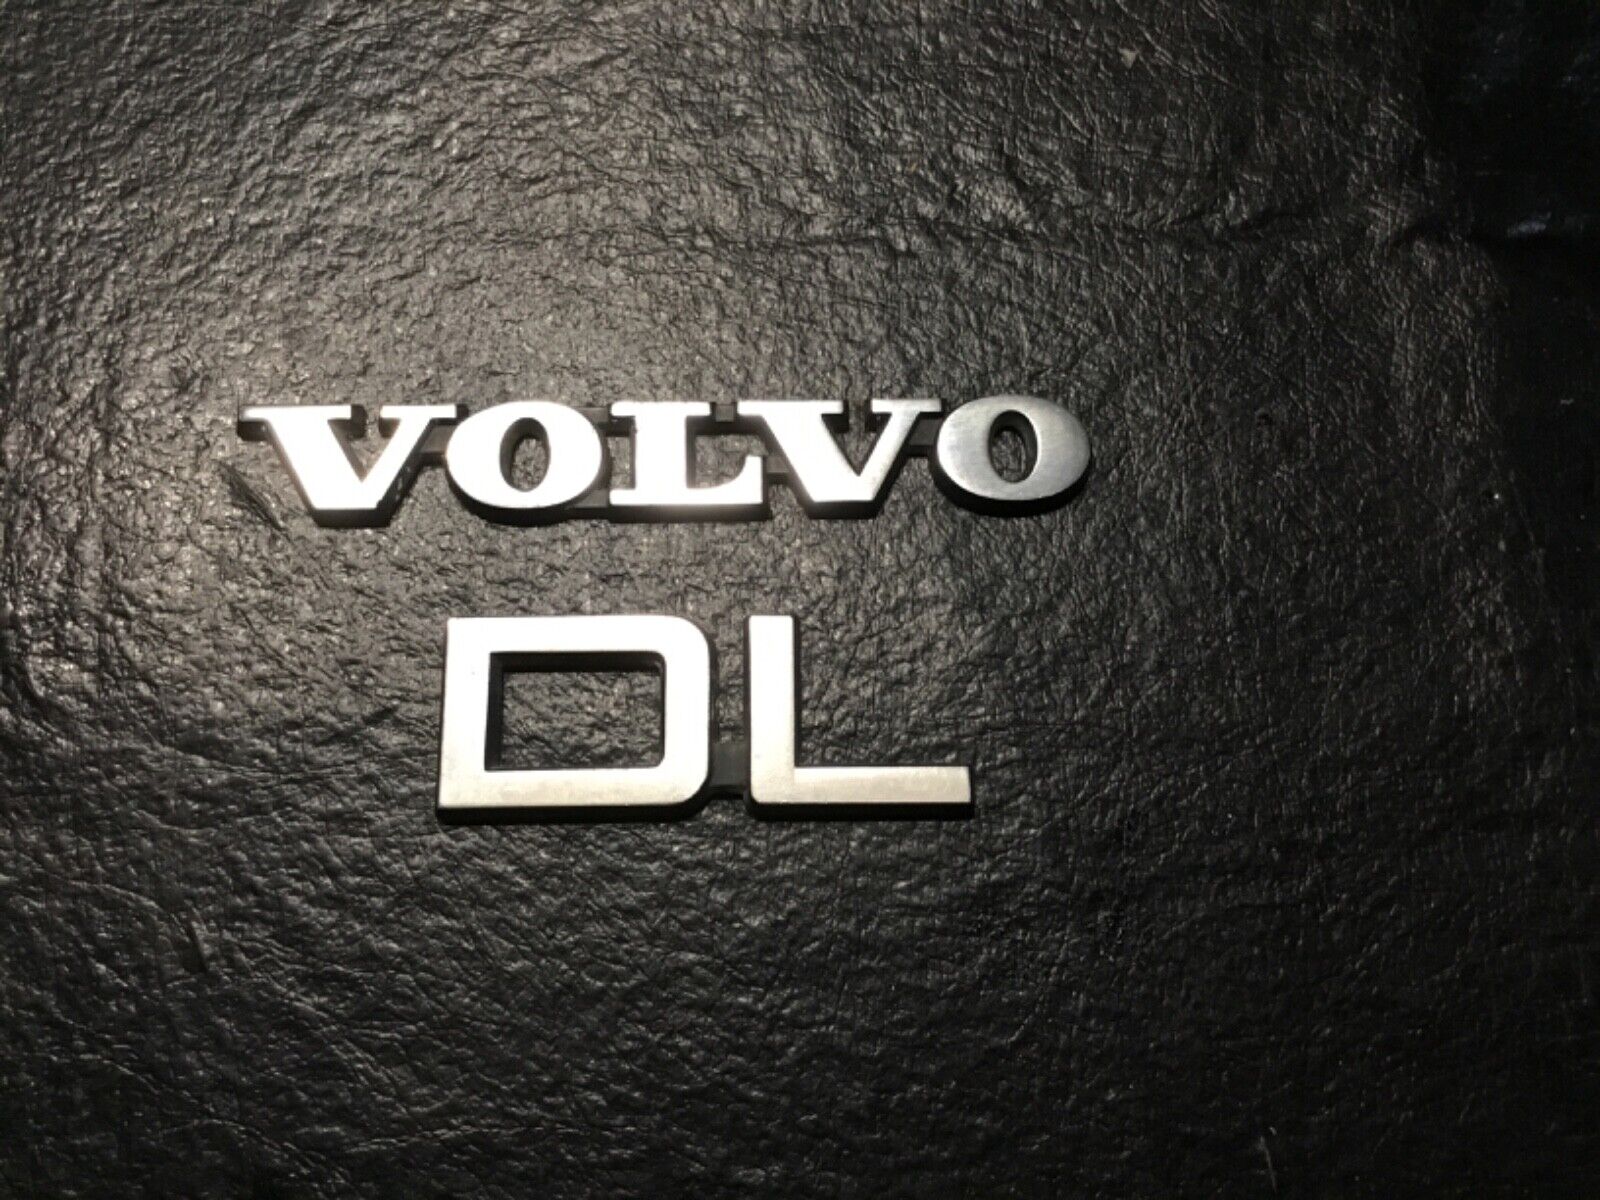 Volvo 240 DL emblems